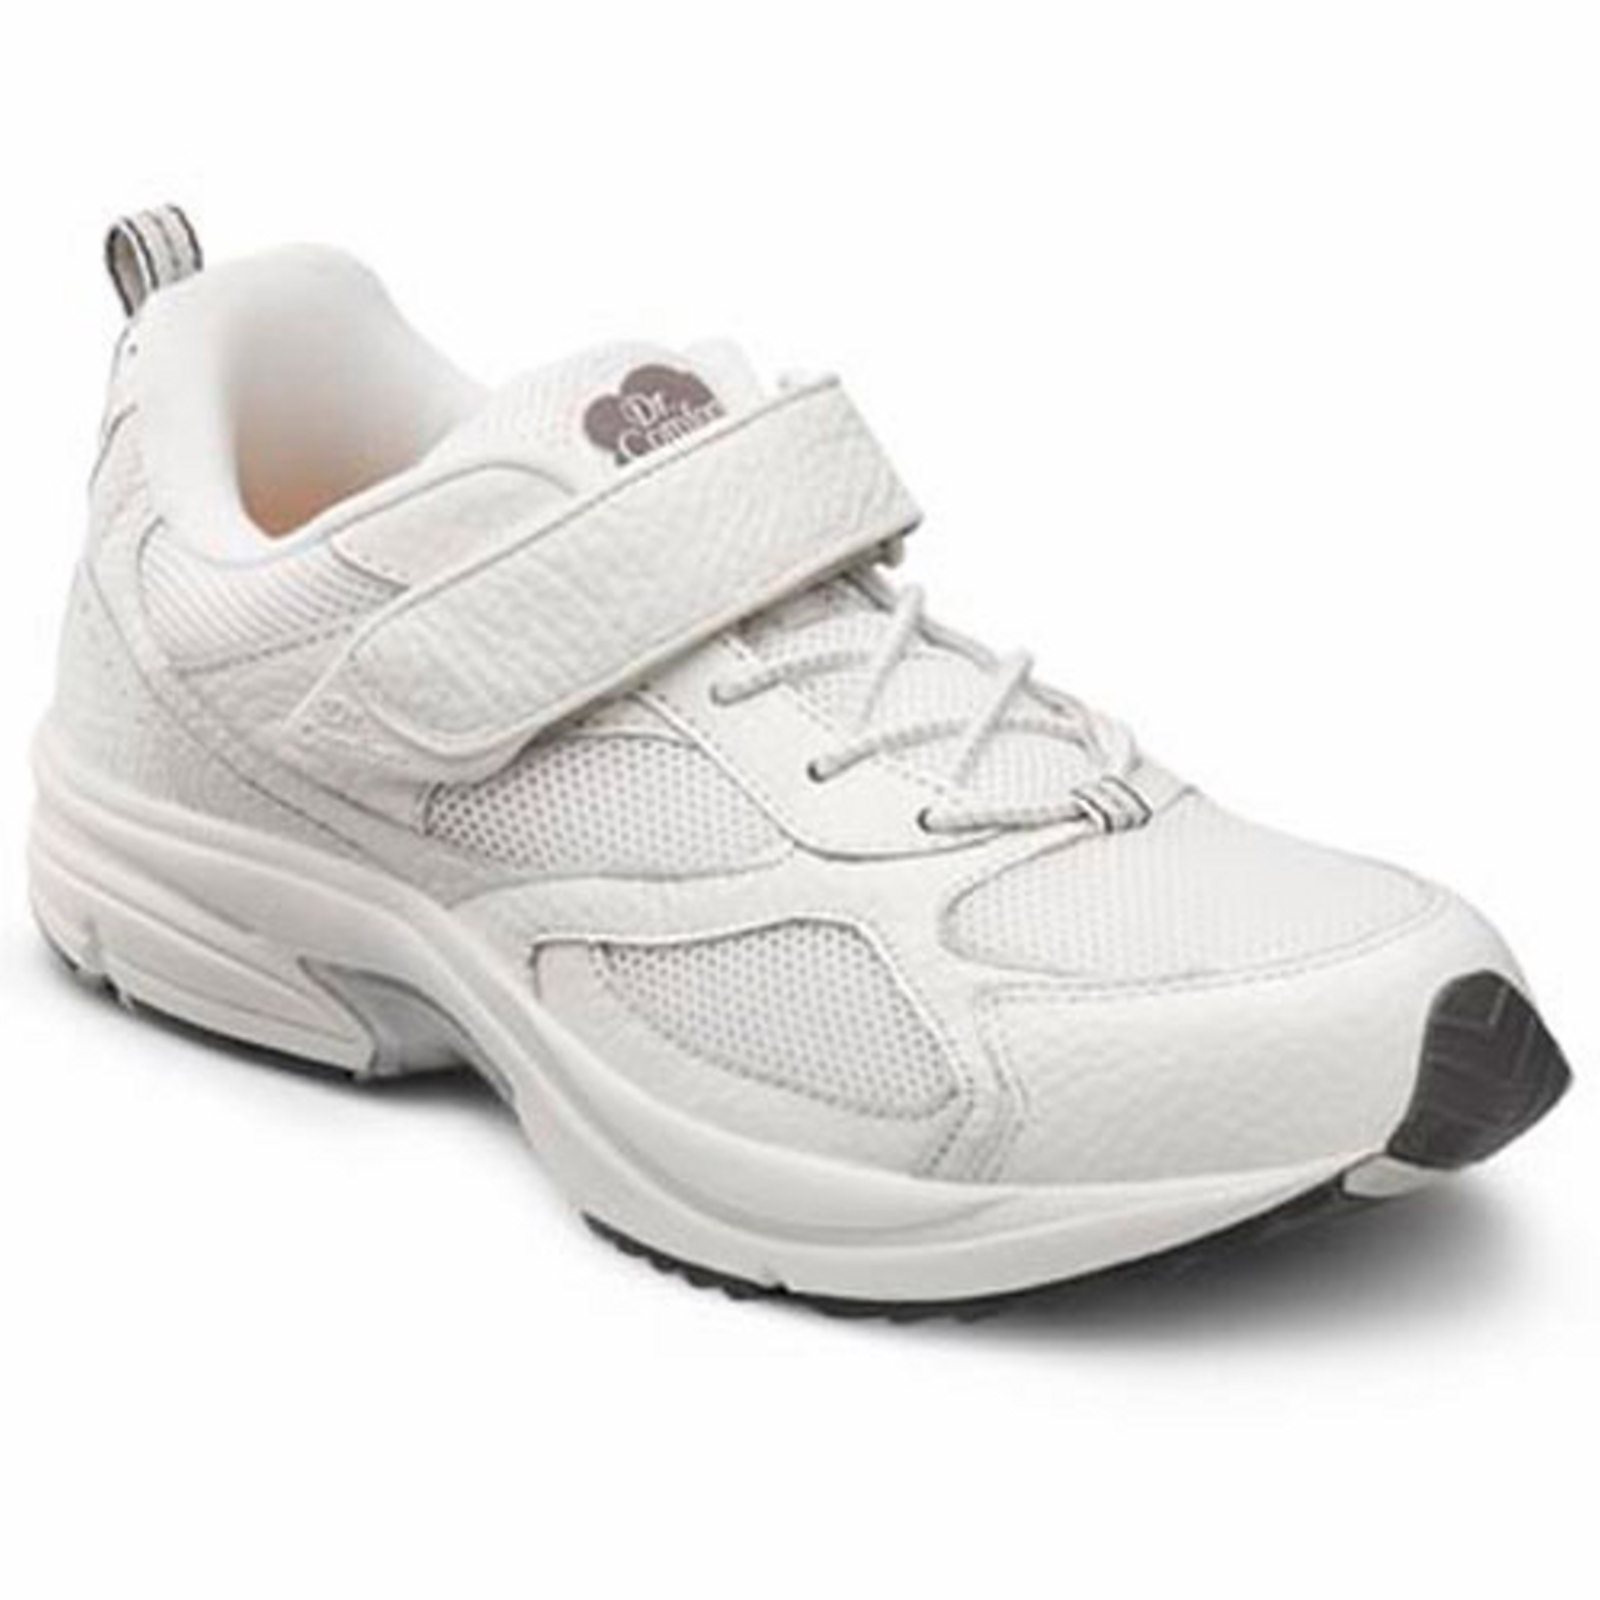 Dr. Comfort Endurance Men's Athletic Shoe: 6 Wide (E/2E) White Elastic Lace w/Strap - image 1 of 4